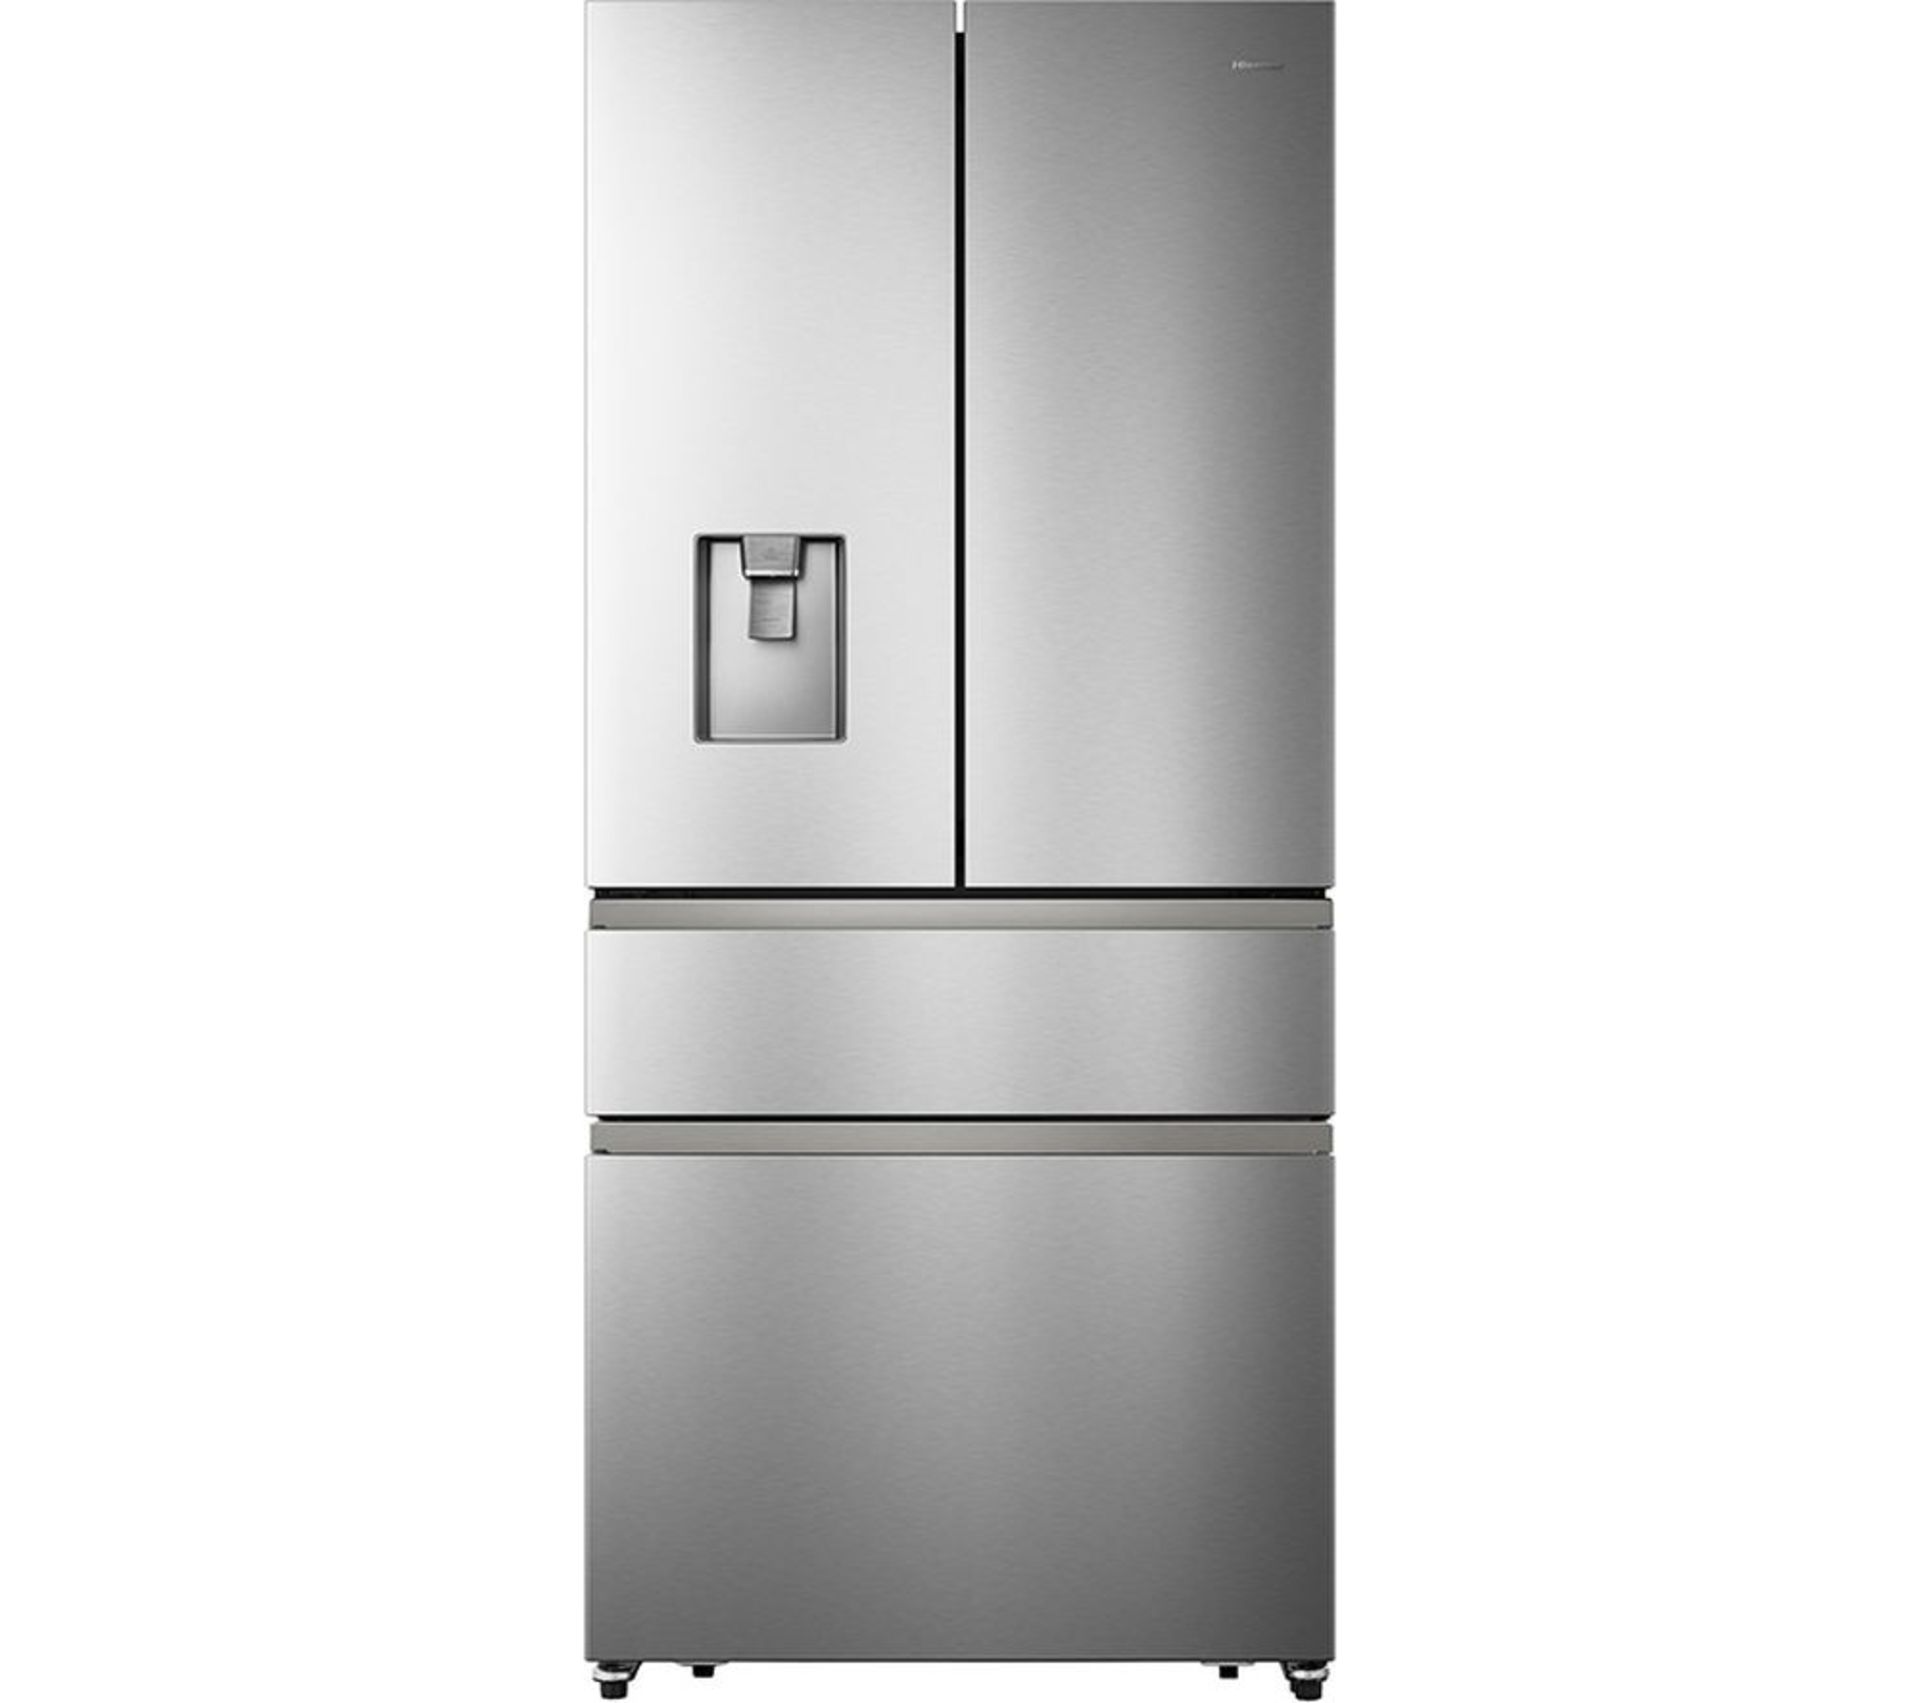 1 x HiSense Pureflat RF540N4Wi1 Stainless Steel Fridge Freezer - Unused With Warranty - RRP £849 - Image 4 of 9